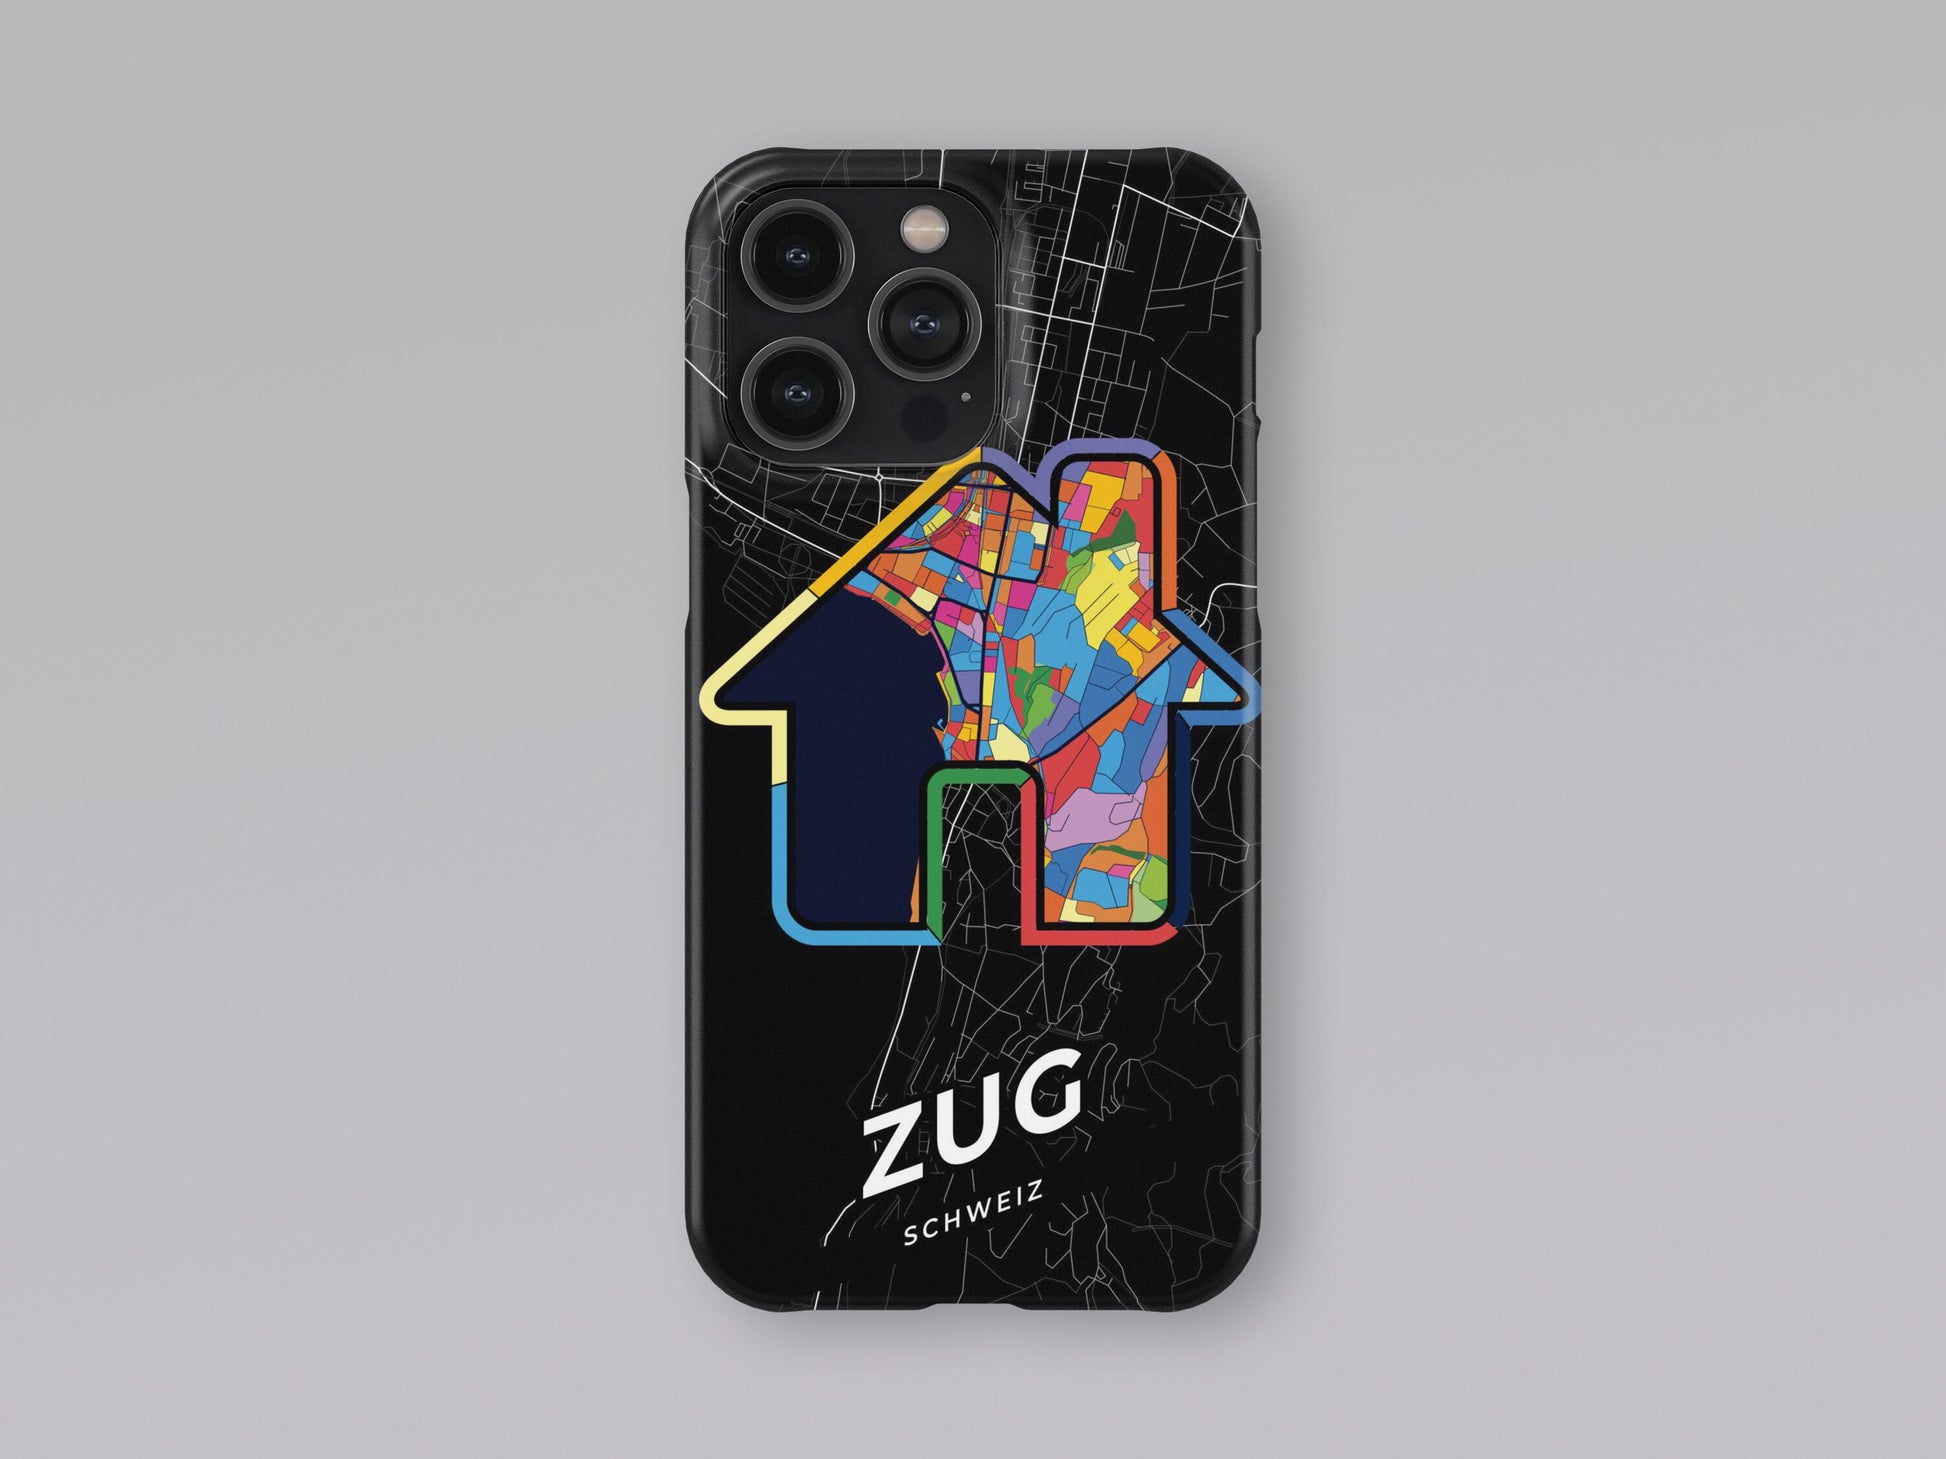 Zug Switzerland slim phone case with colorful icon 3